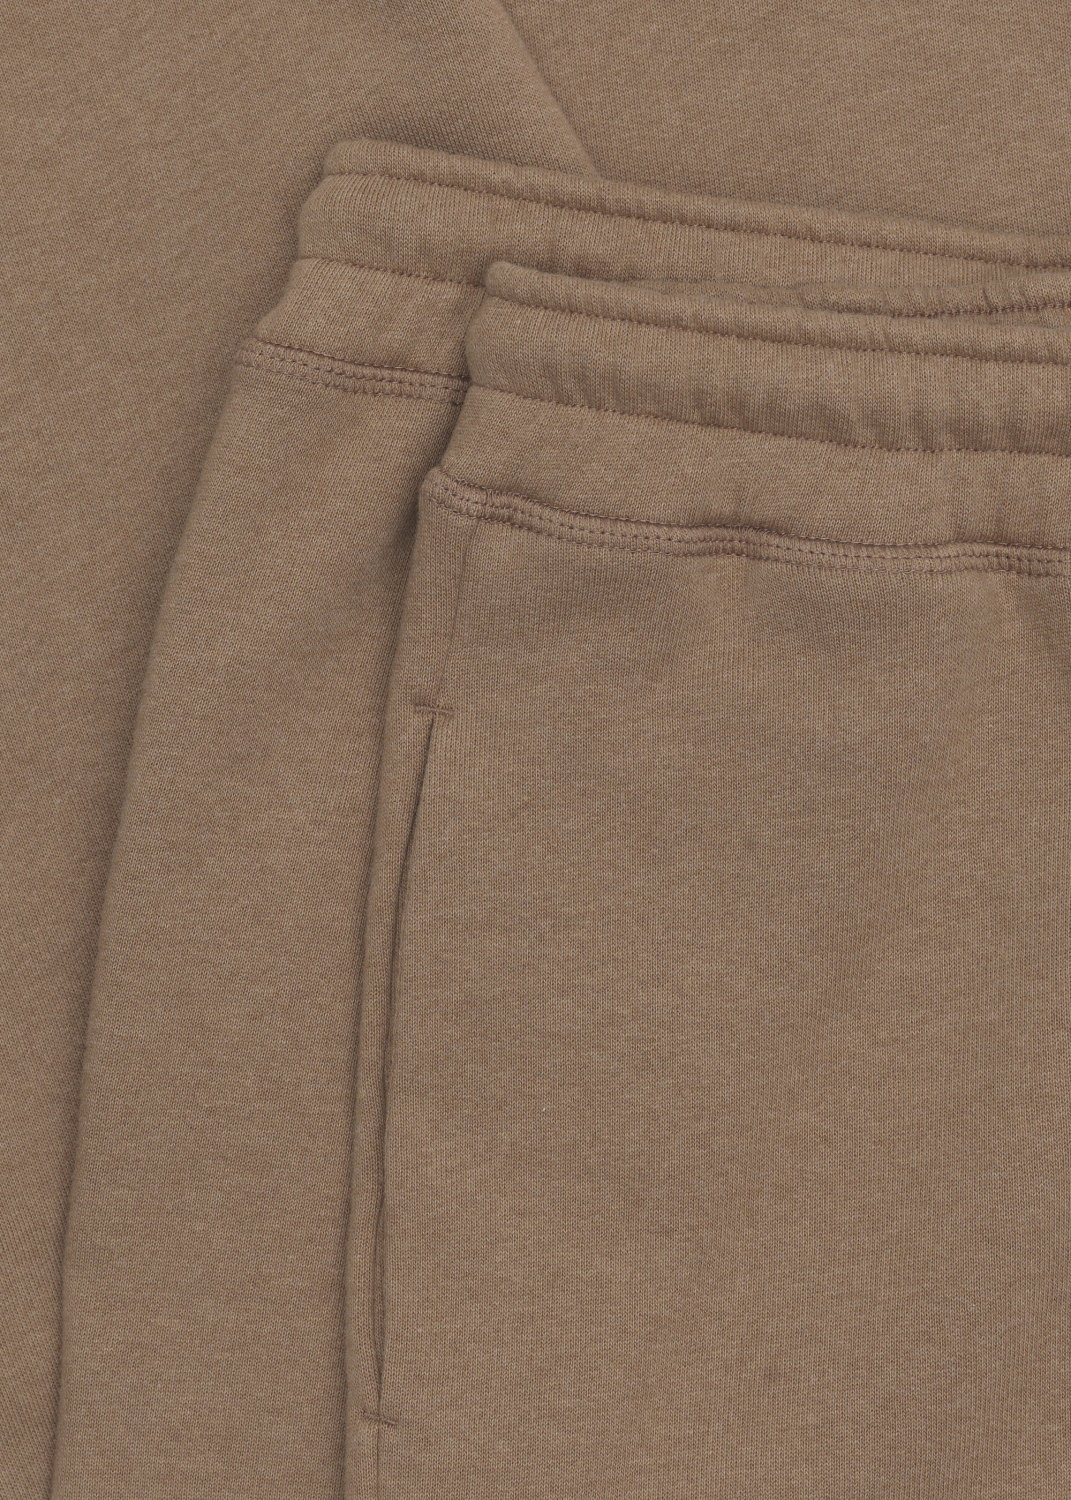 Hosen & Shorts - Sweatpants 